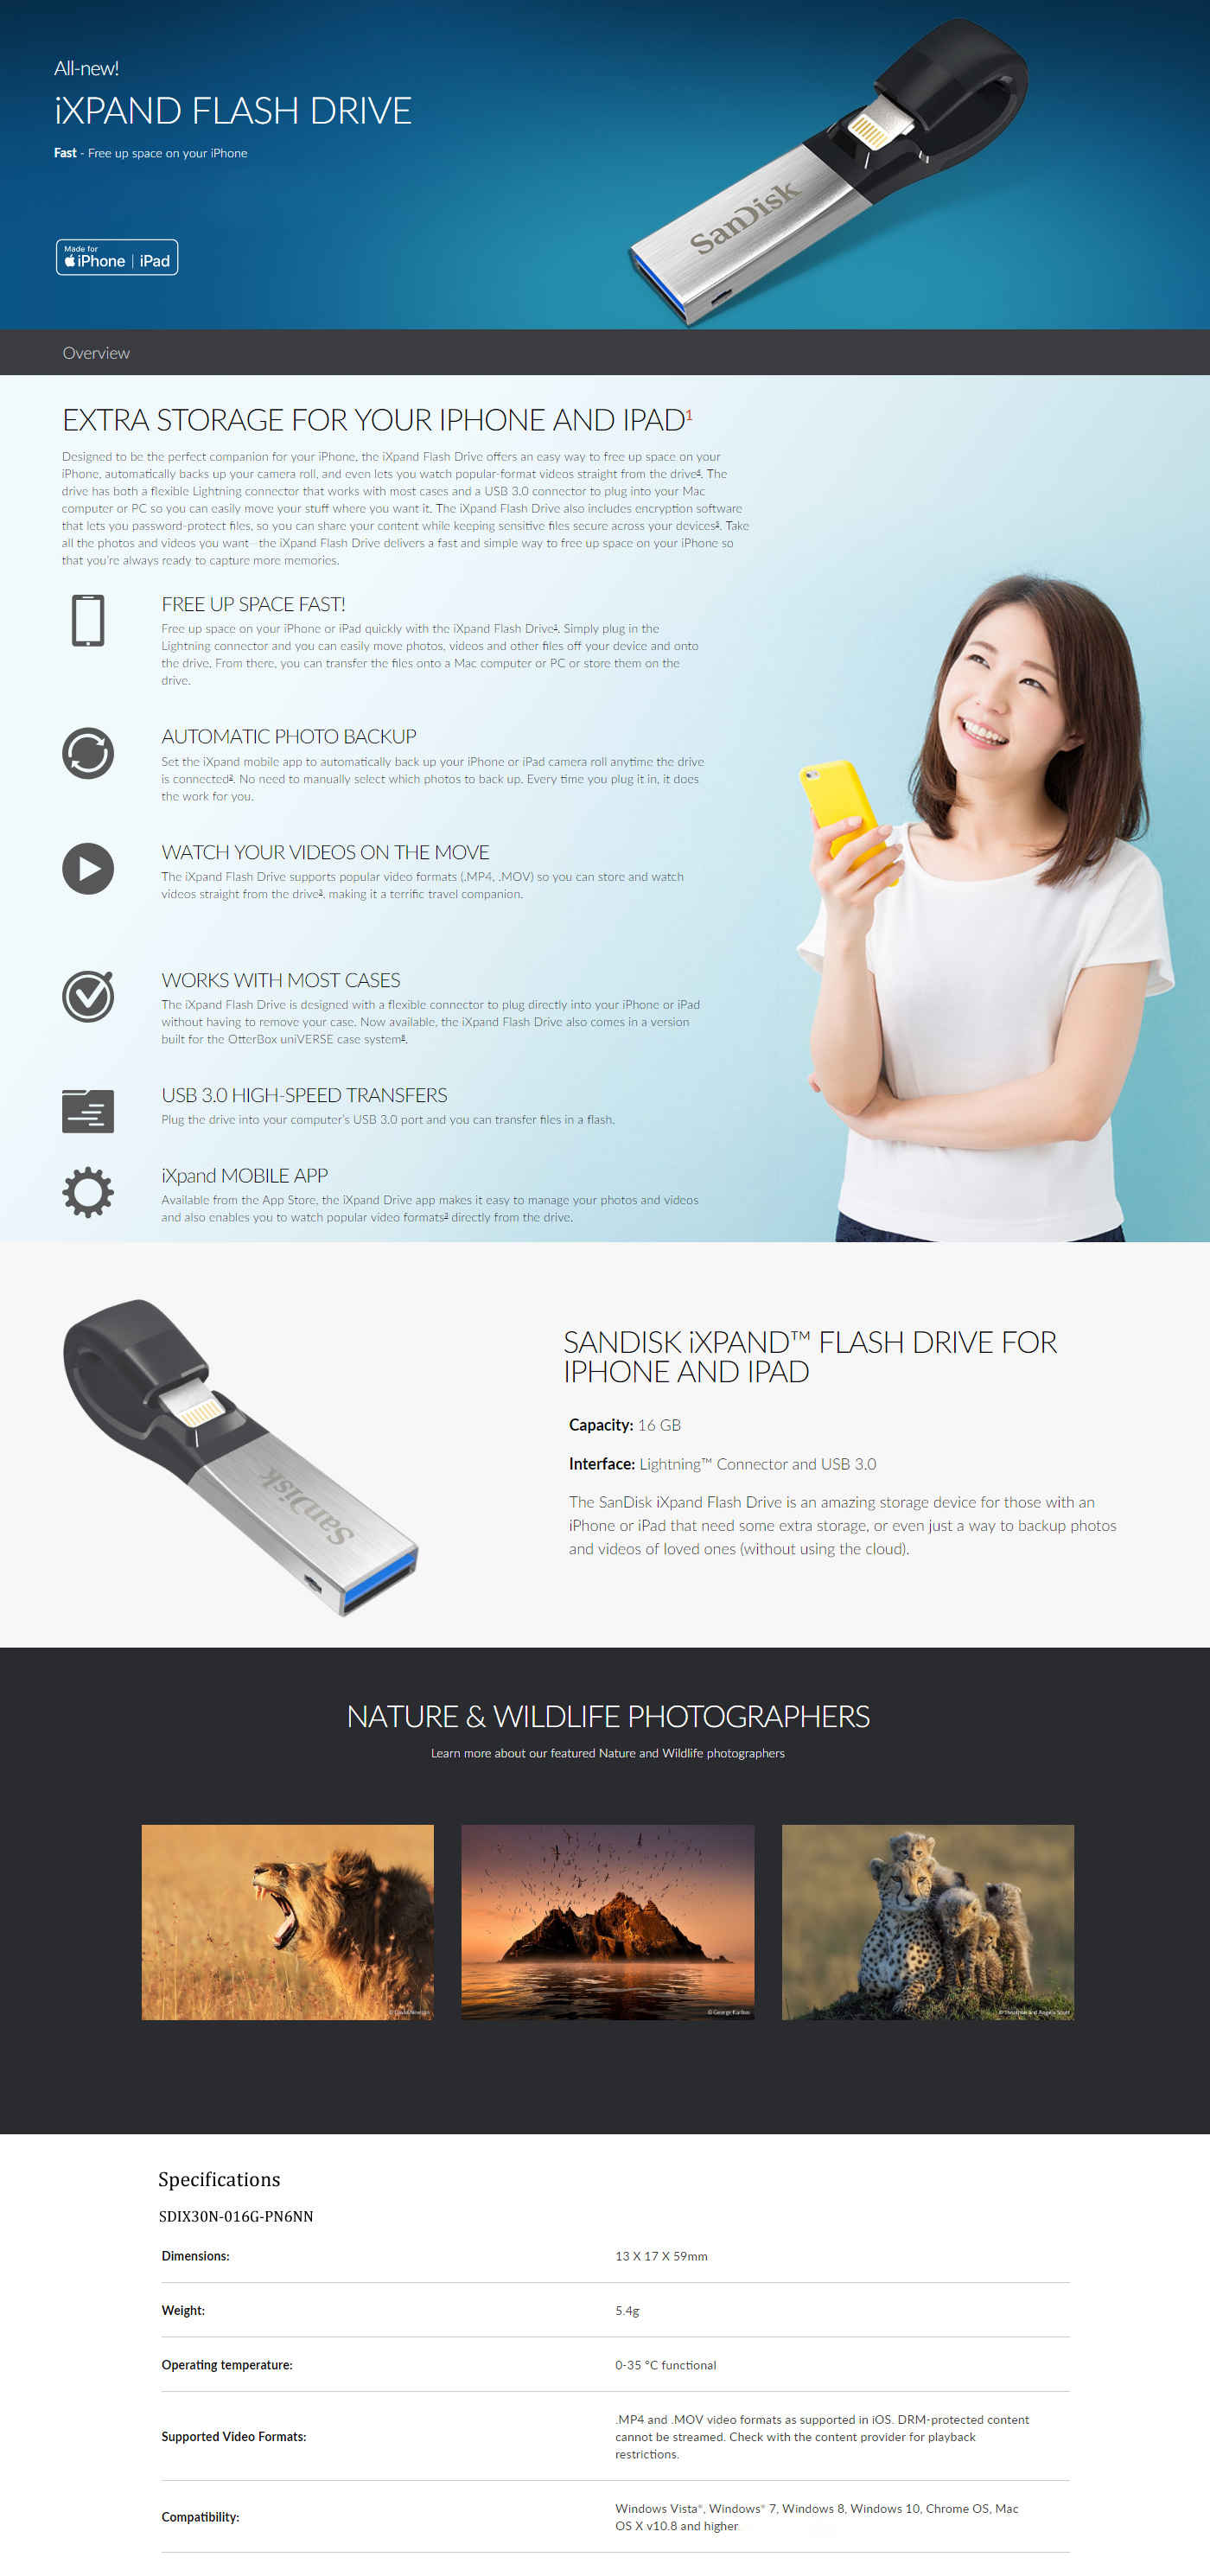 Buy Online Sandisk iXpand 16GB Flash Drive (SDIX30N-016G-PN6NN)